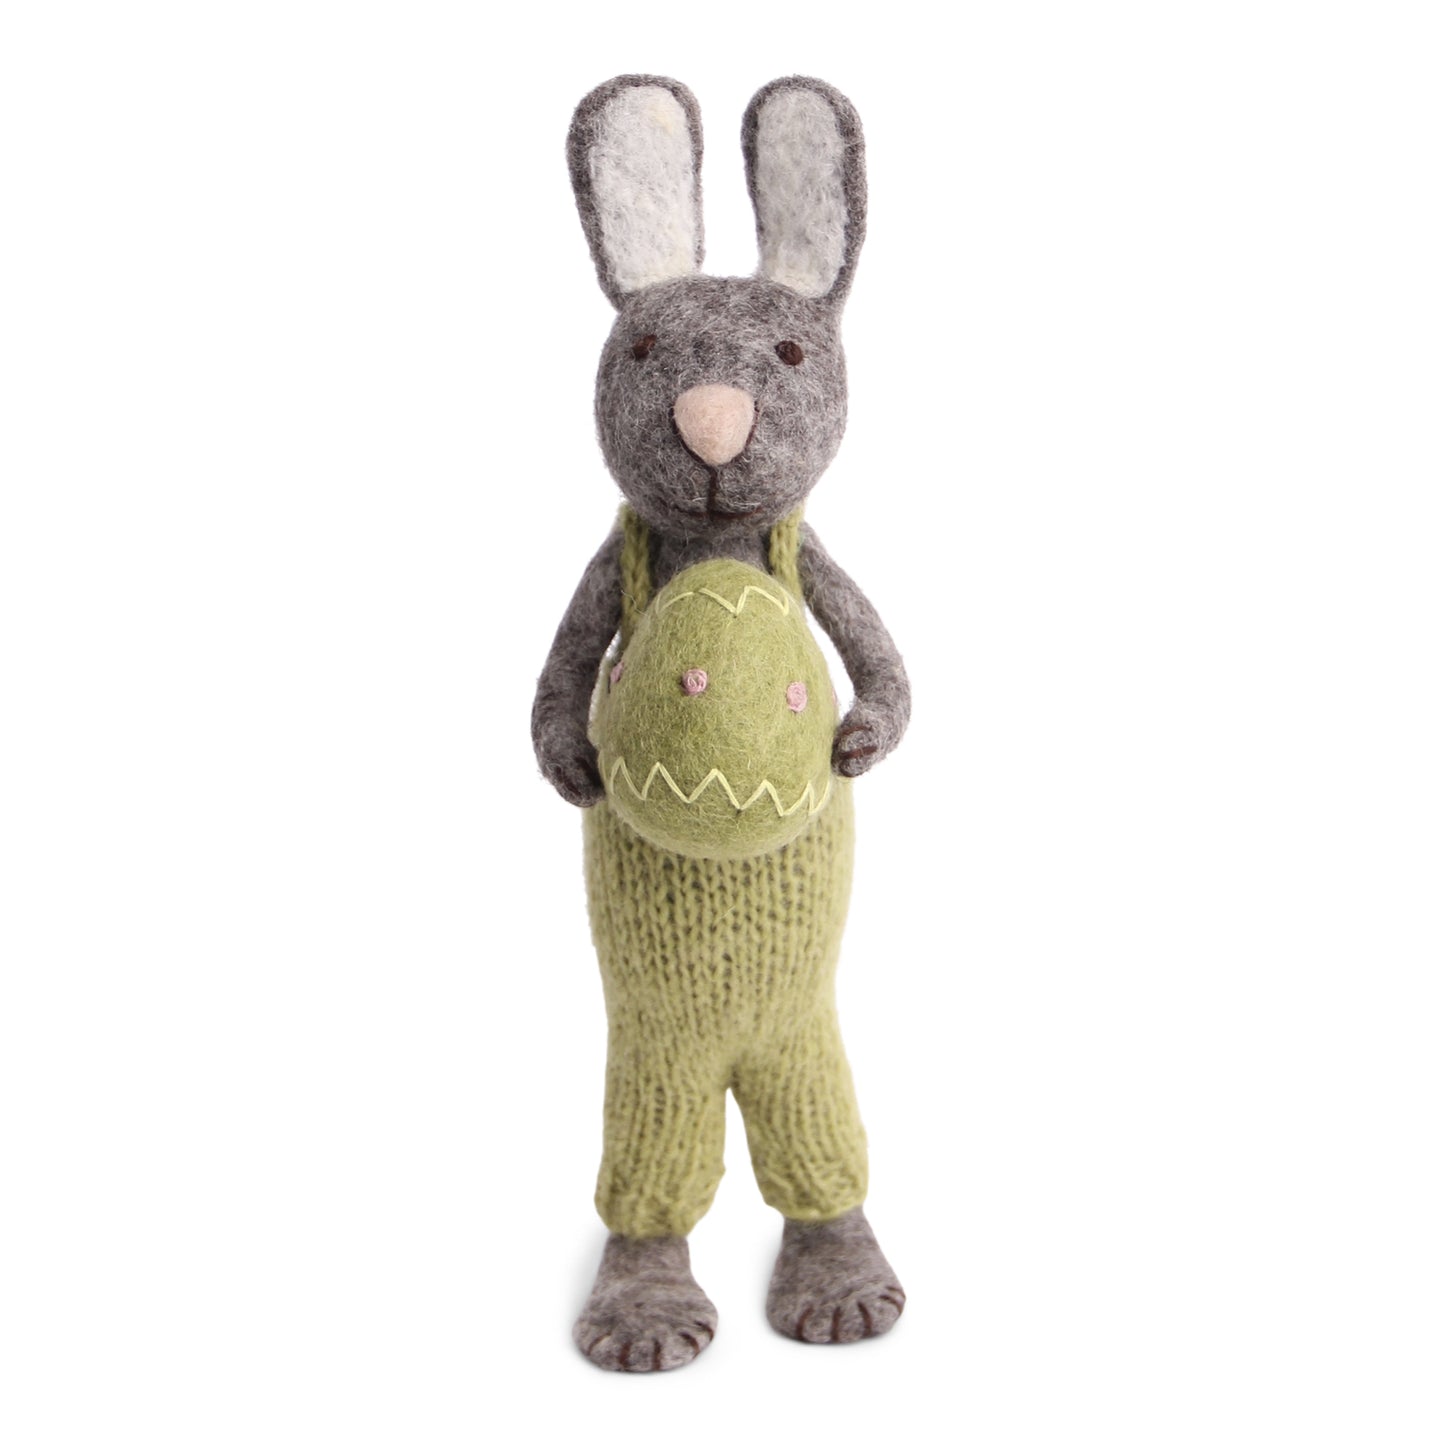 Gry & Sif Bunny Big Grey pants & green egg